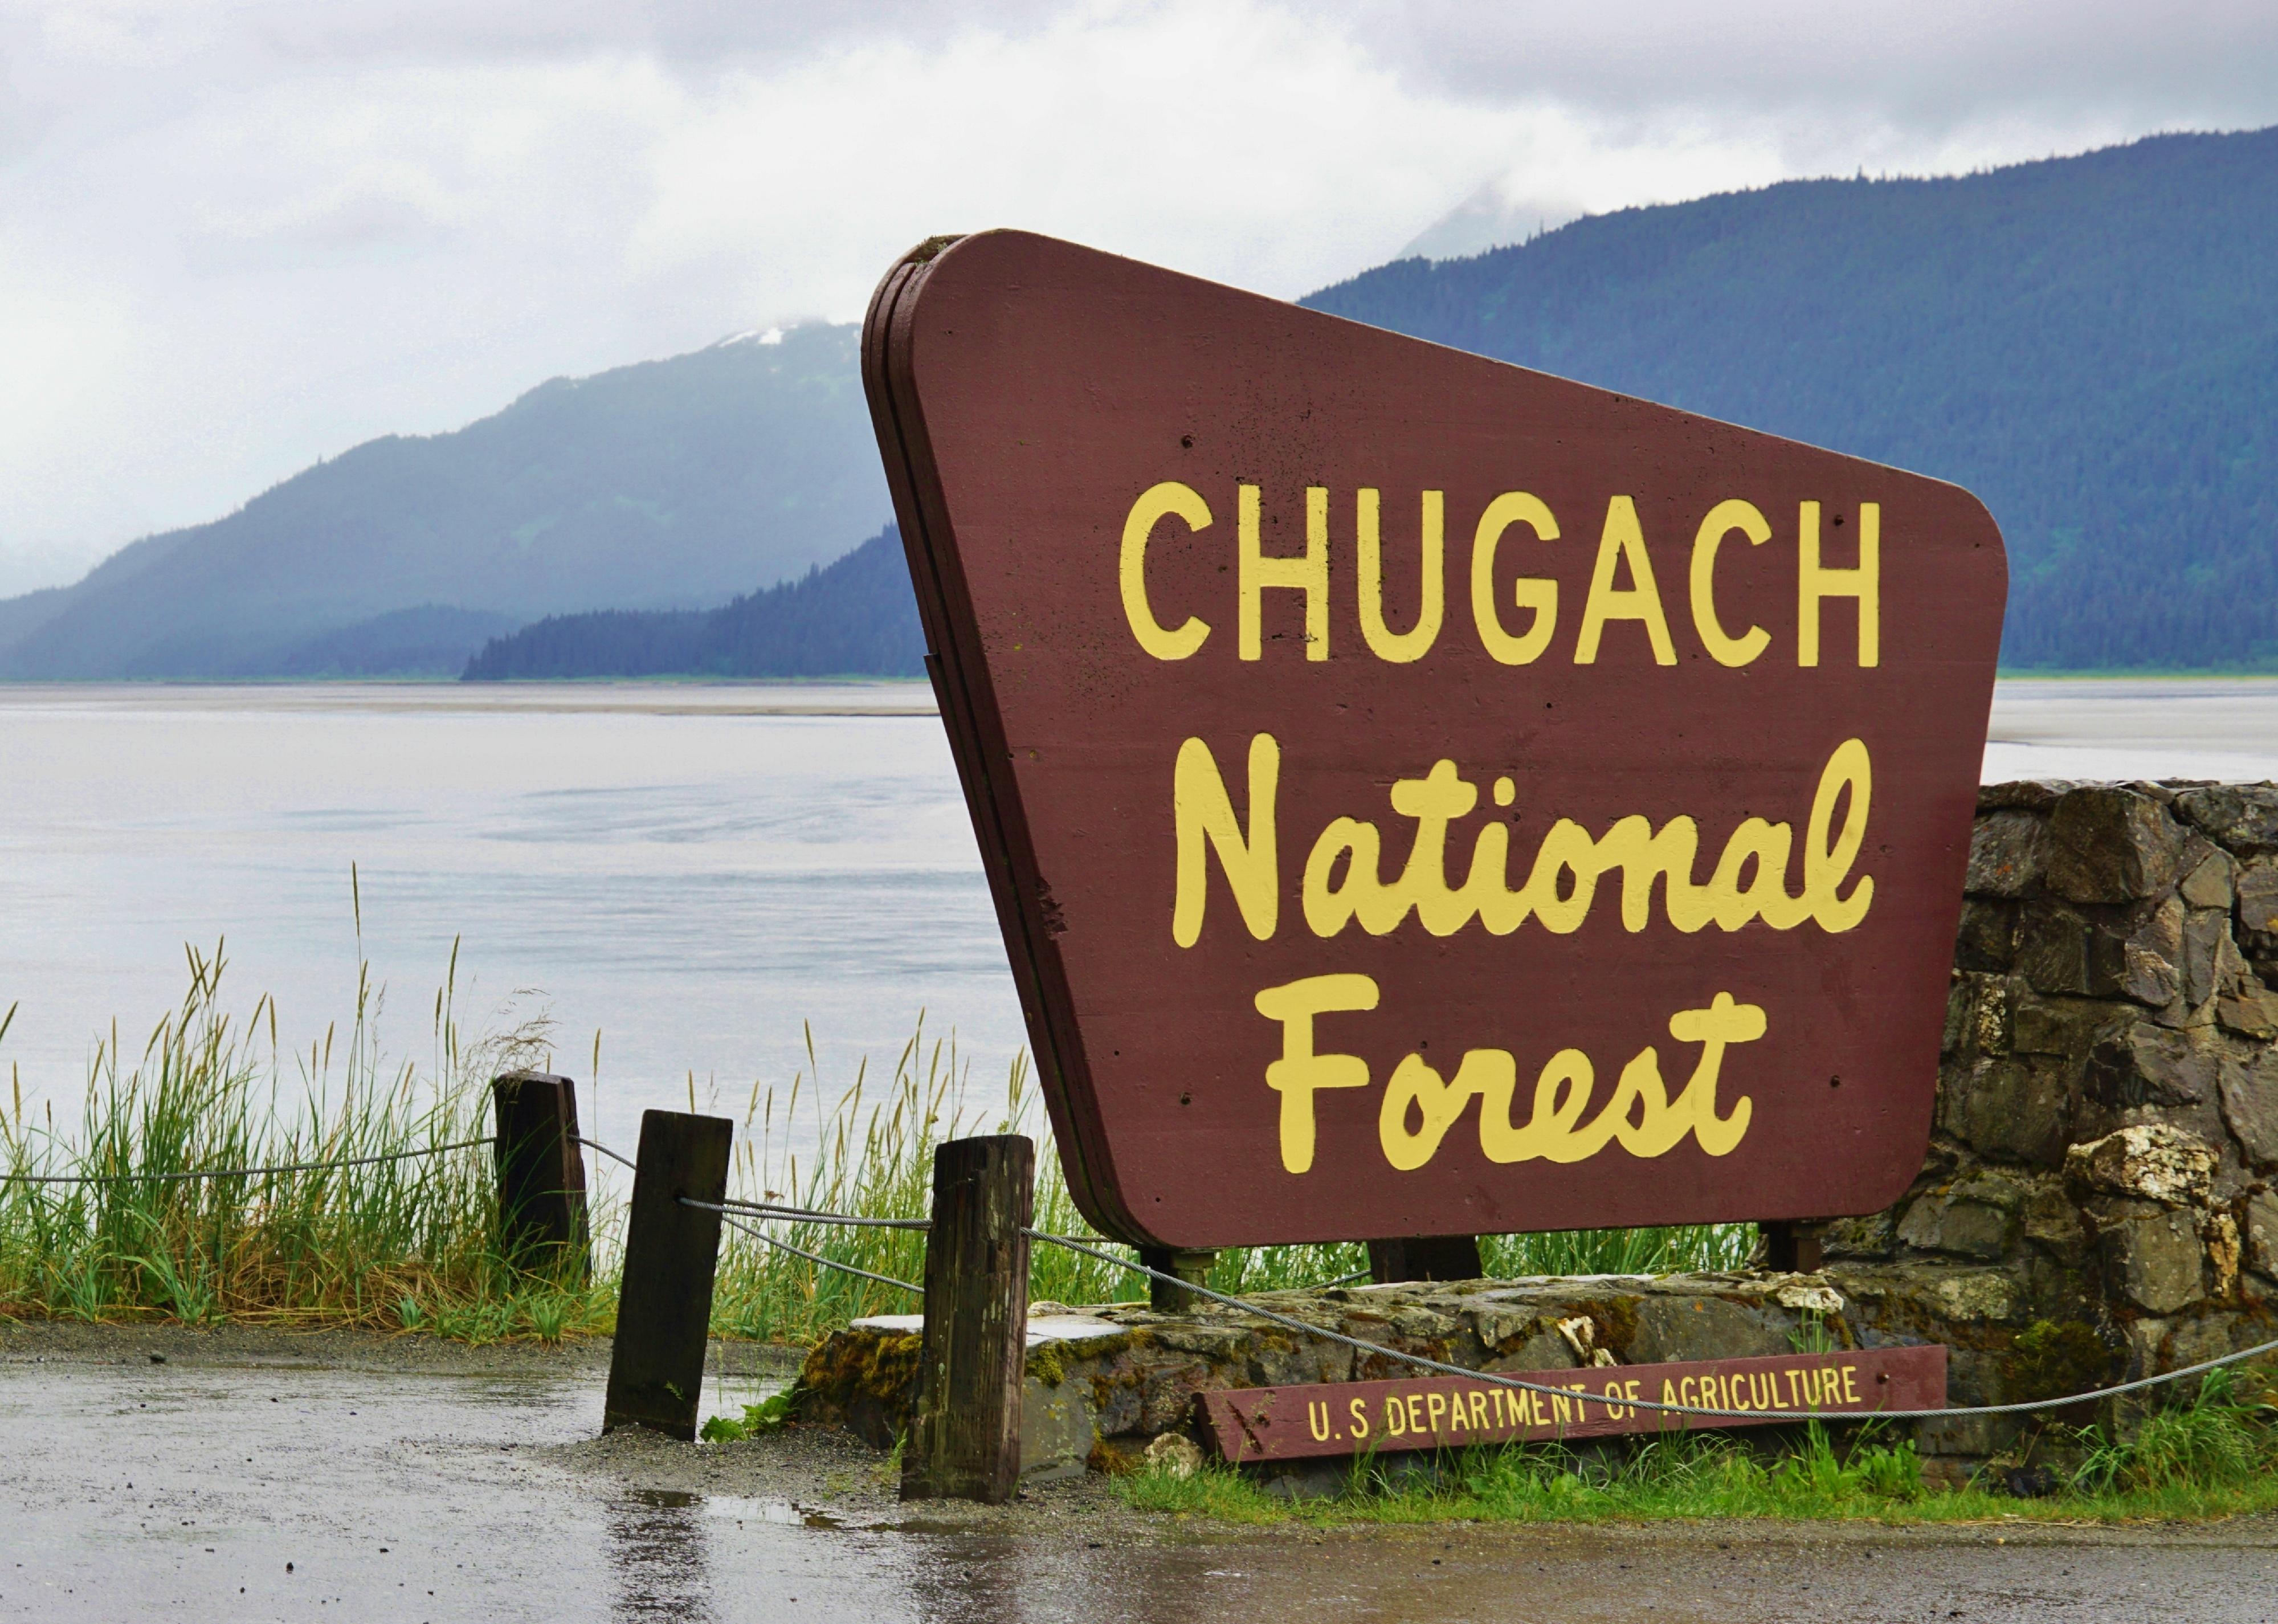 The Chugach National Forest sign on an overcast day.